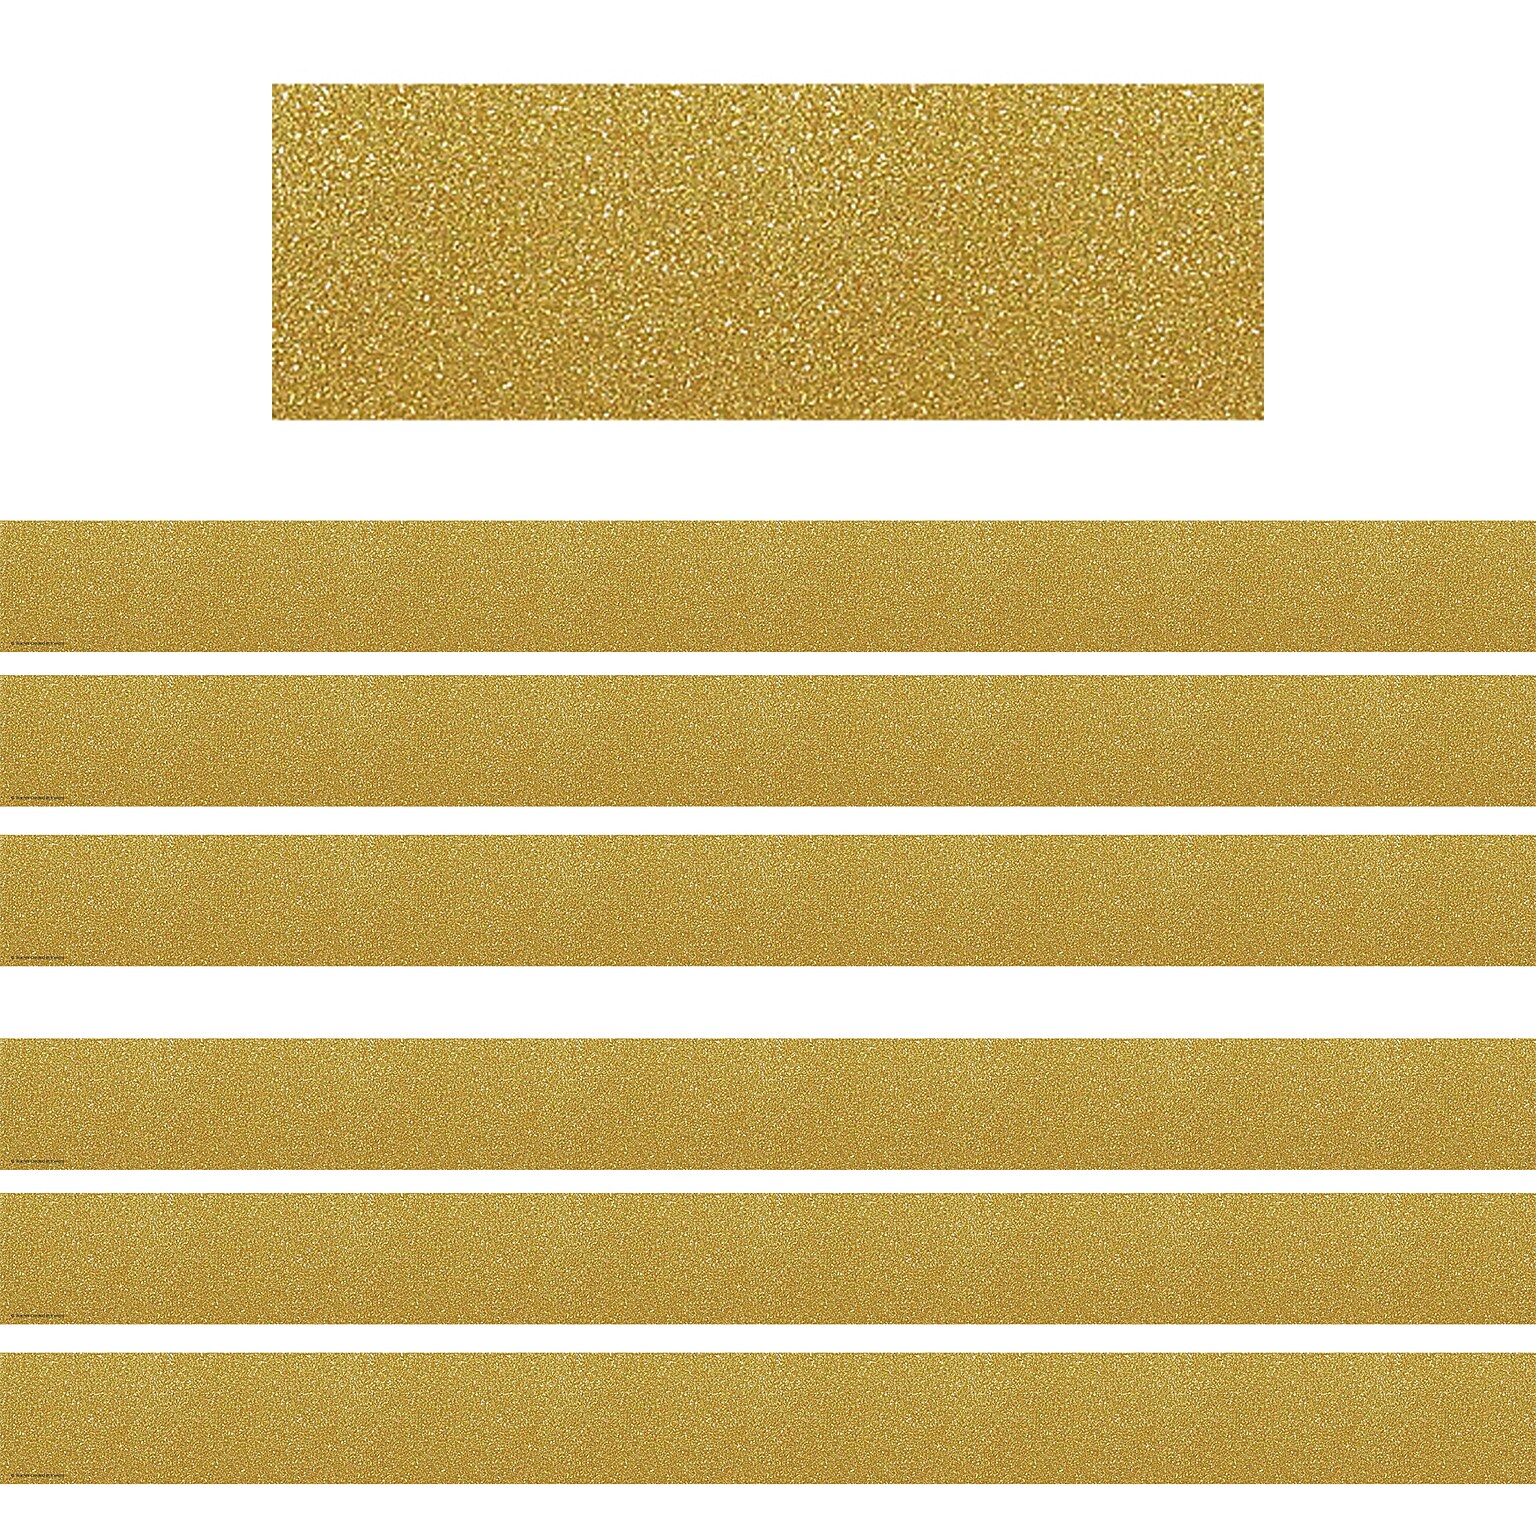 Teacher Created Resources Confetti Gold Straight Border Trim, 35 Feet Per Pack, 6 Packs (TCR5627-6)